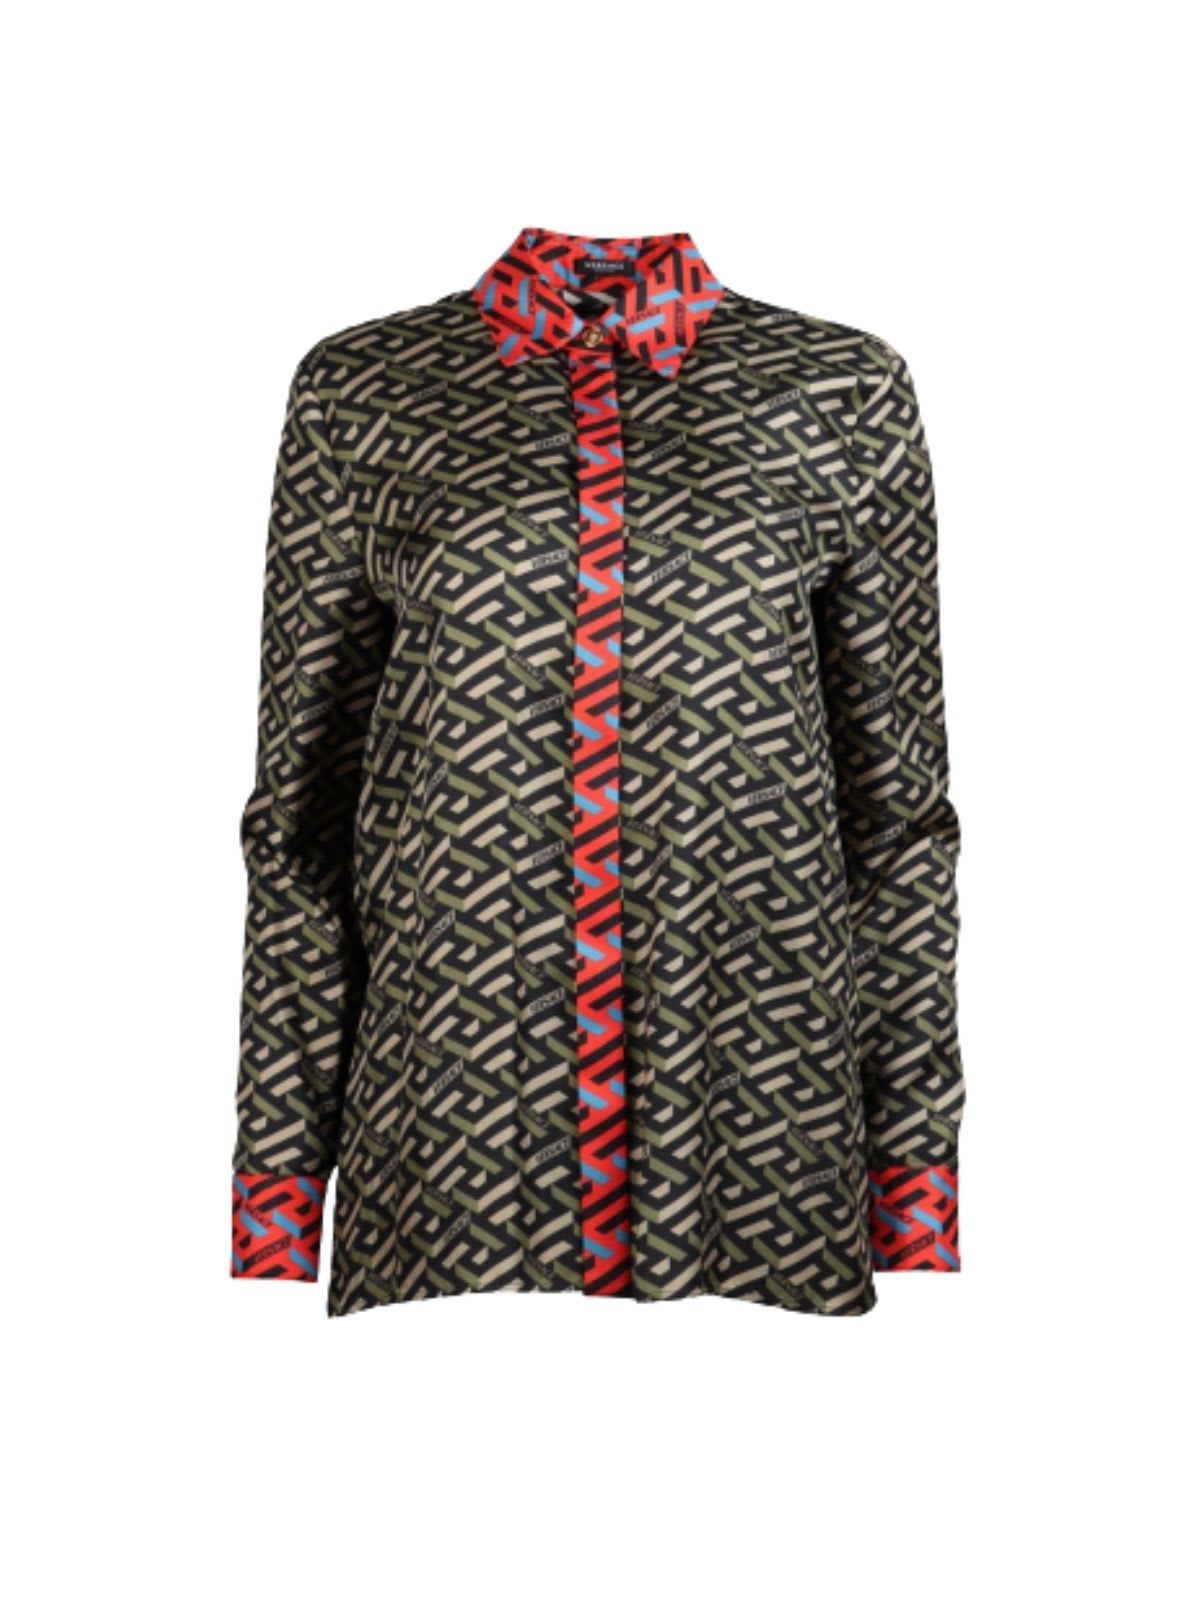 Versace Jacquard Silk Shirt